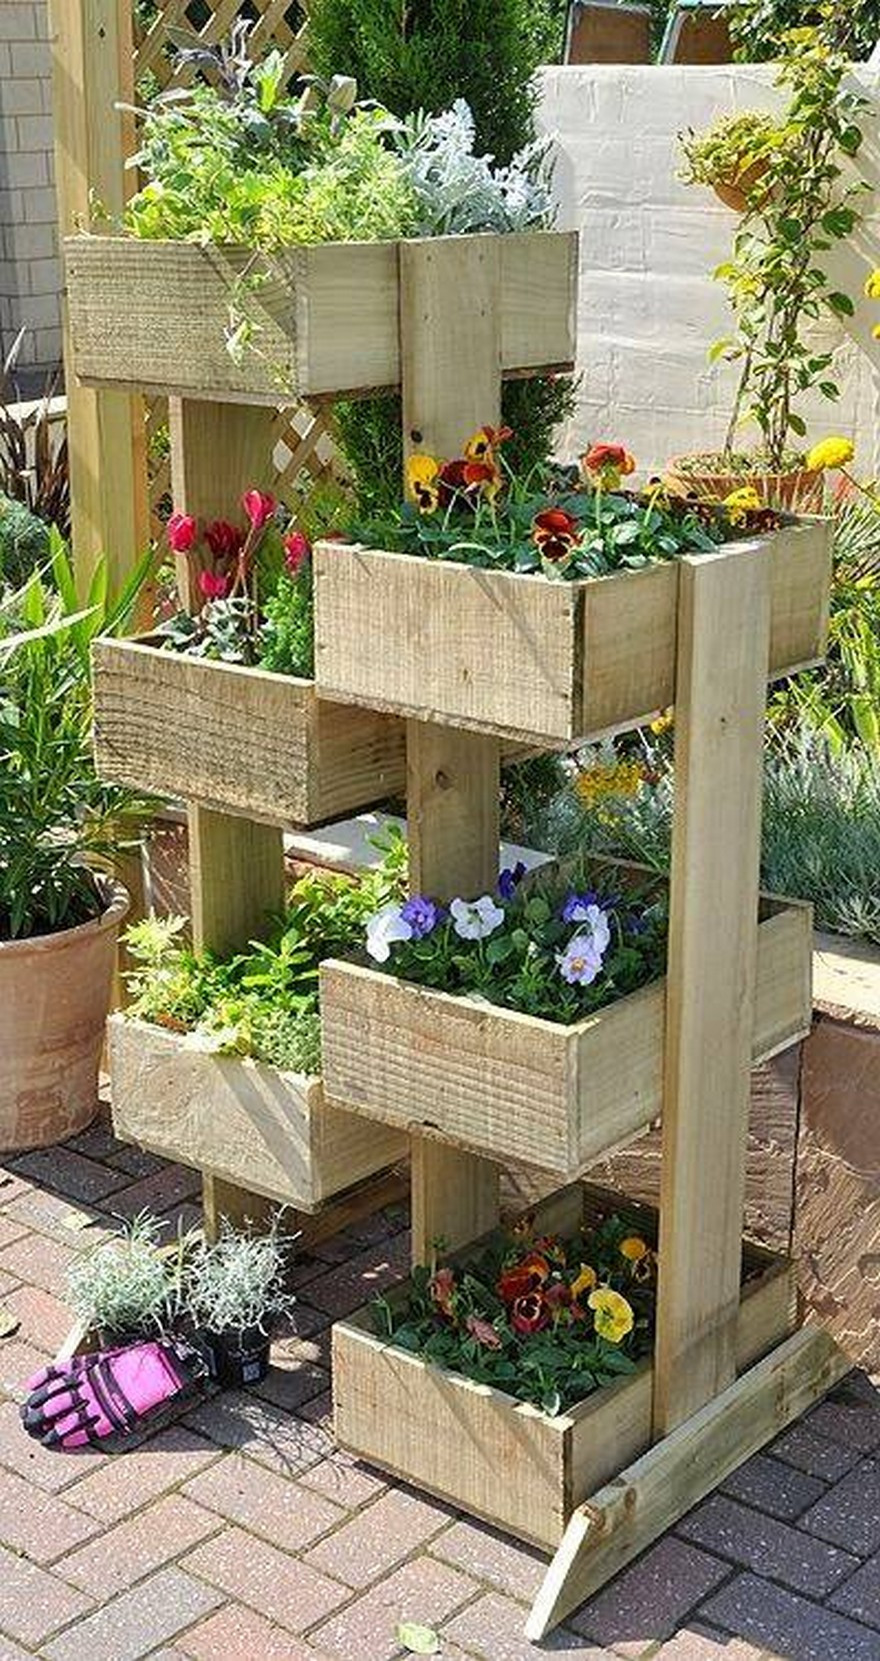 Best ideas about Garden Planter Ideas
. Save or Pin Wonderful Pallet Wood Ideas Now.